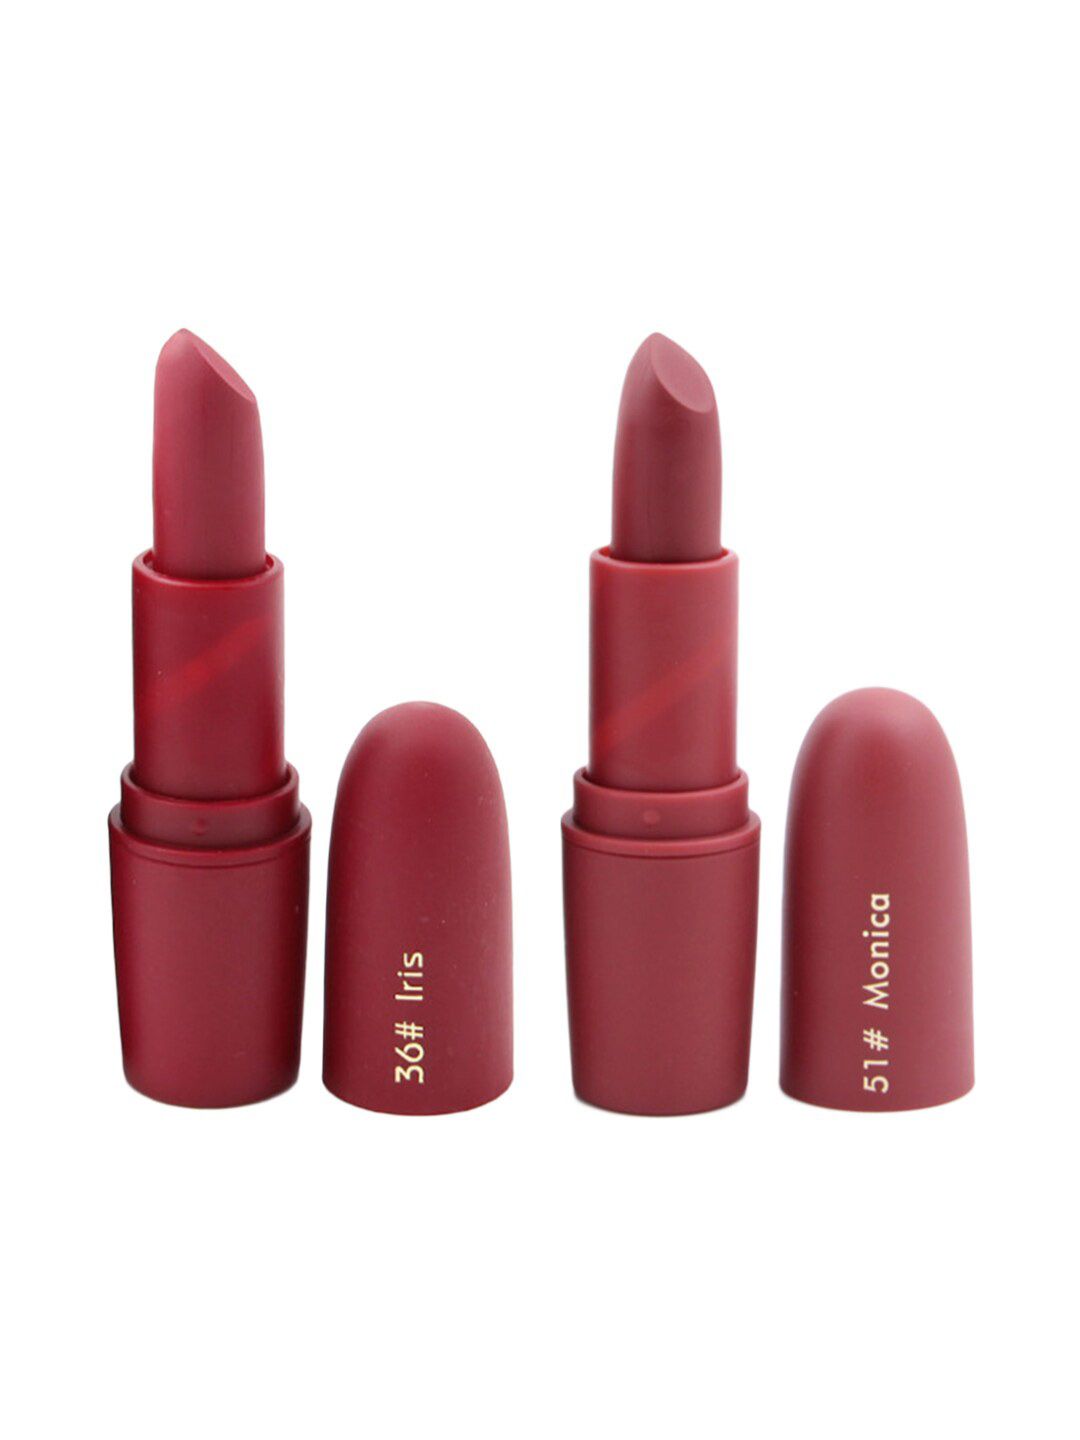 MISS ROSE Professional Make-Up Set of 2 Matte Creamy Lipsticks - Iris 36 & Monica 51 Price in India